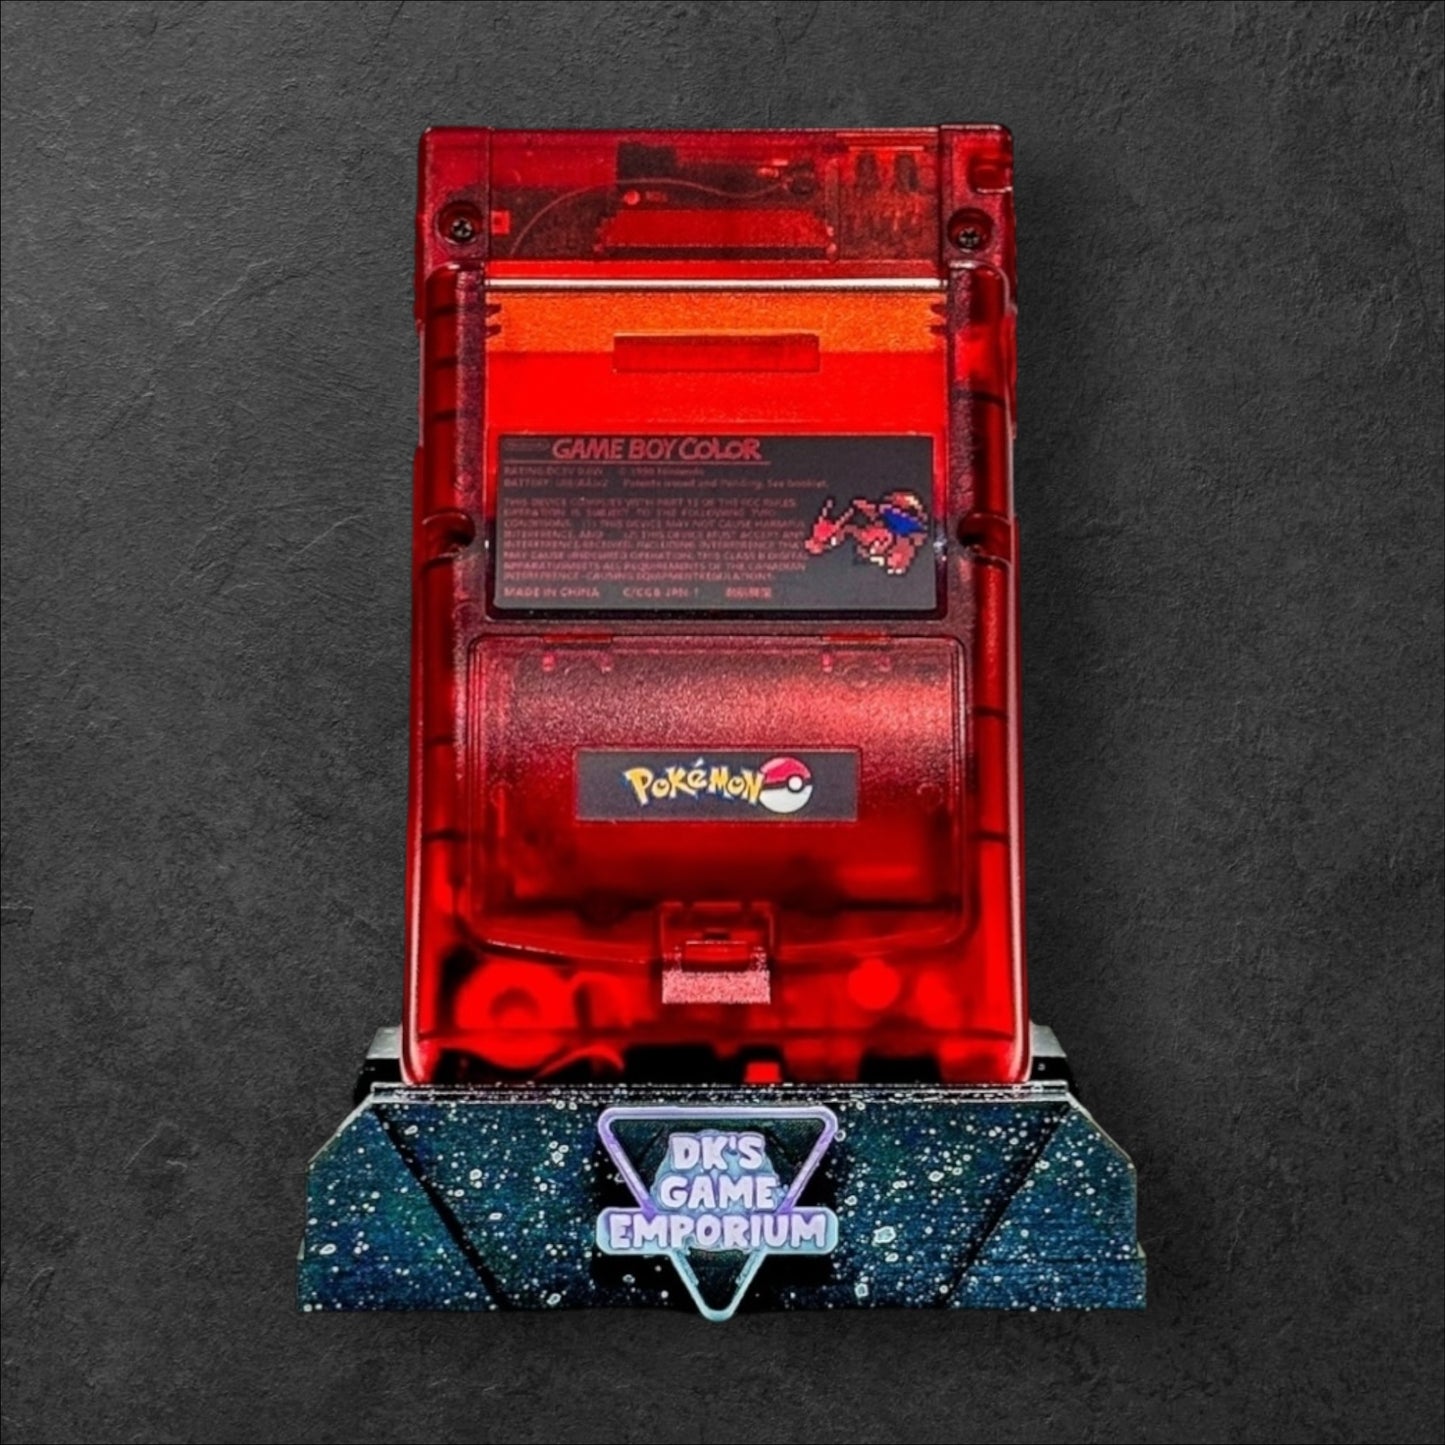 Nintendo Game Boy Color - Red Charizard Edition